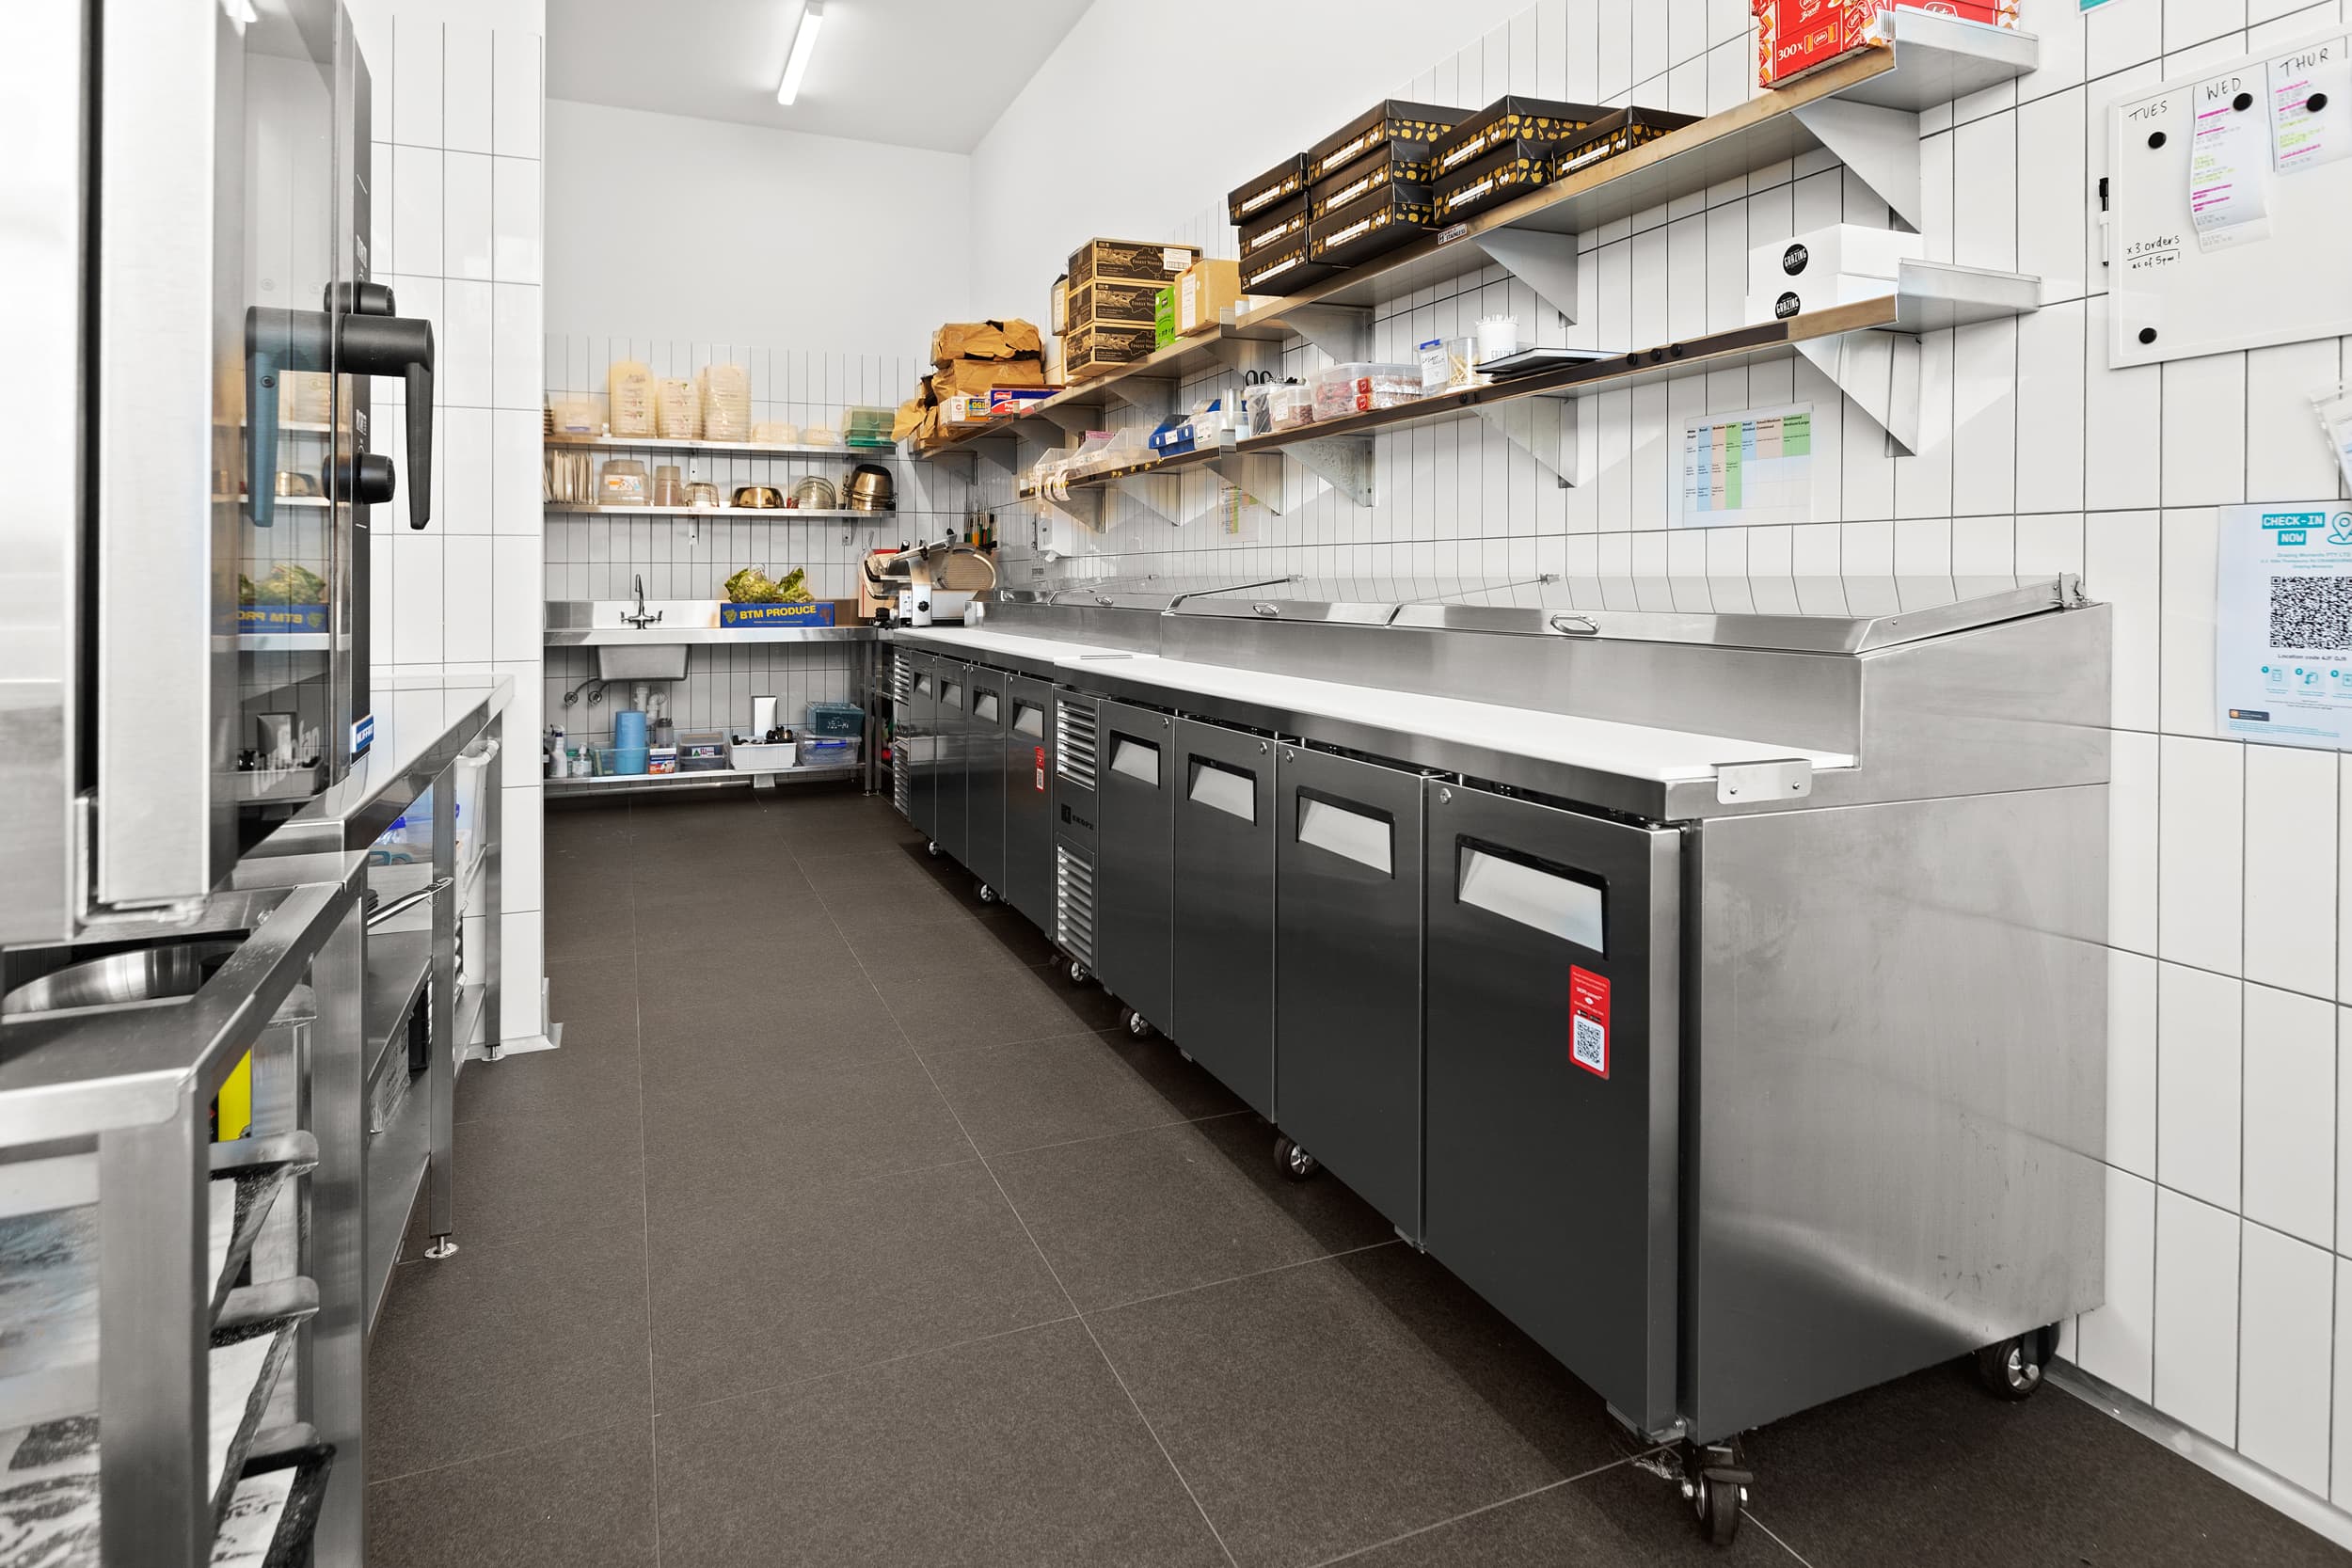 Commercial kitchen stainless steel custom designed for a restaurant